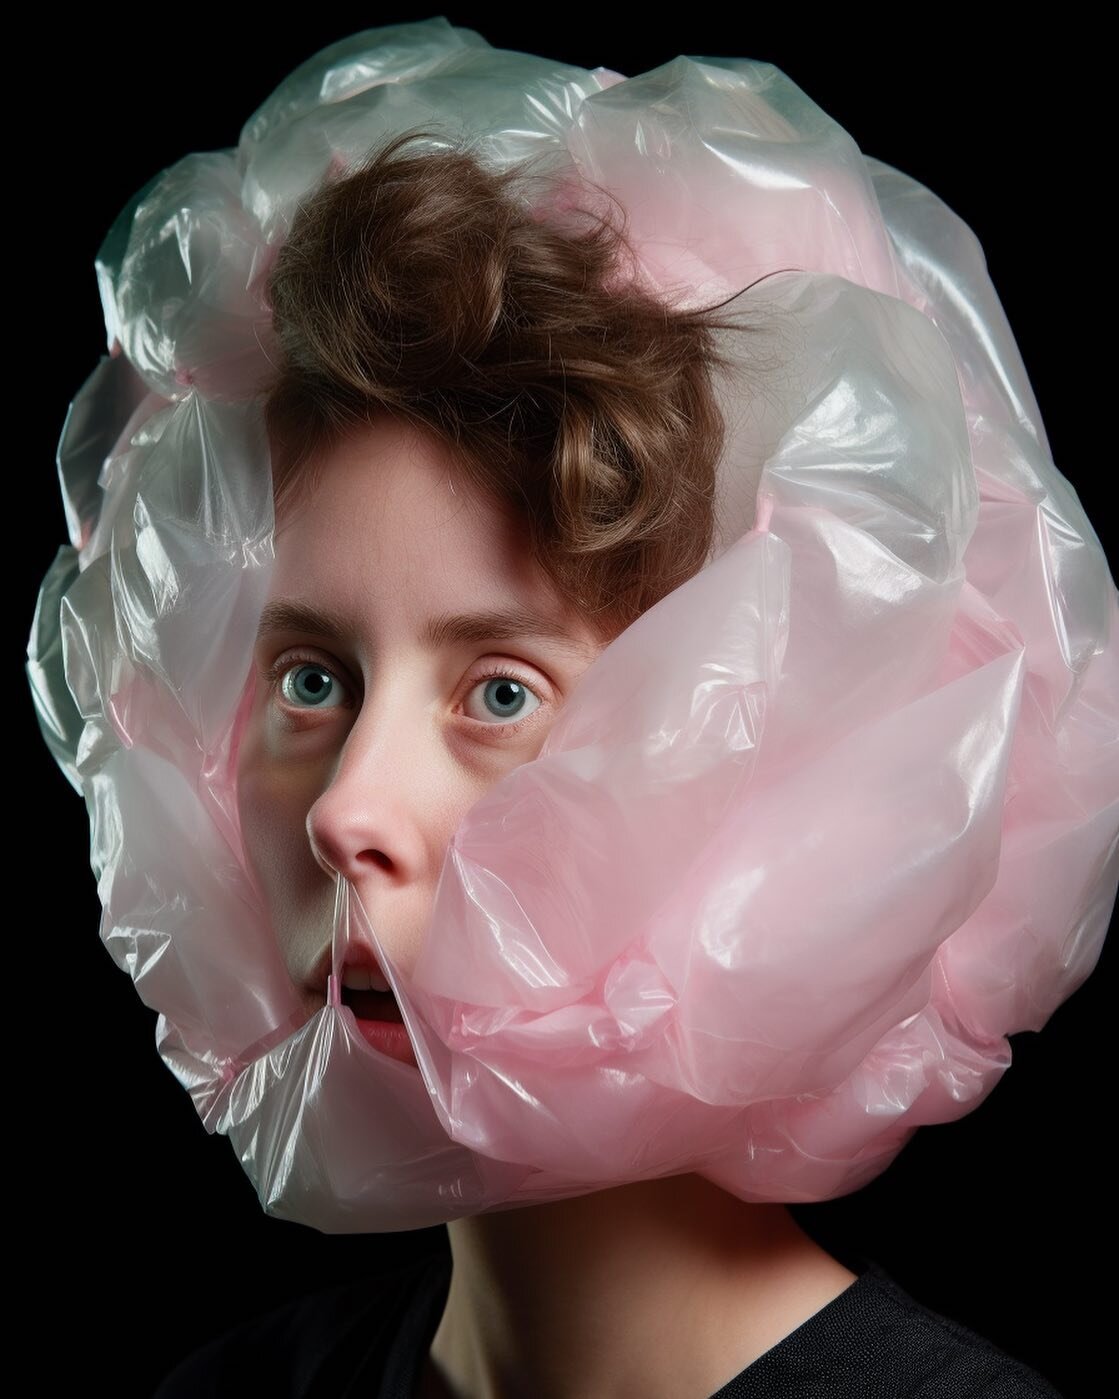 Bubble Wrap #ai #midjourney #aiart #synthography #midjourneyart #art #digitalart #synthography #midjourneycrew #midjourneyv5 #generativeart #pink #girl #bubble #bubbles #bubblewrap #portrait #weirdart